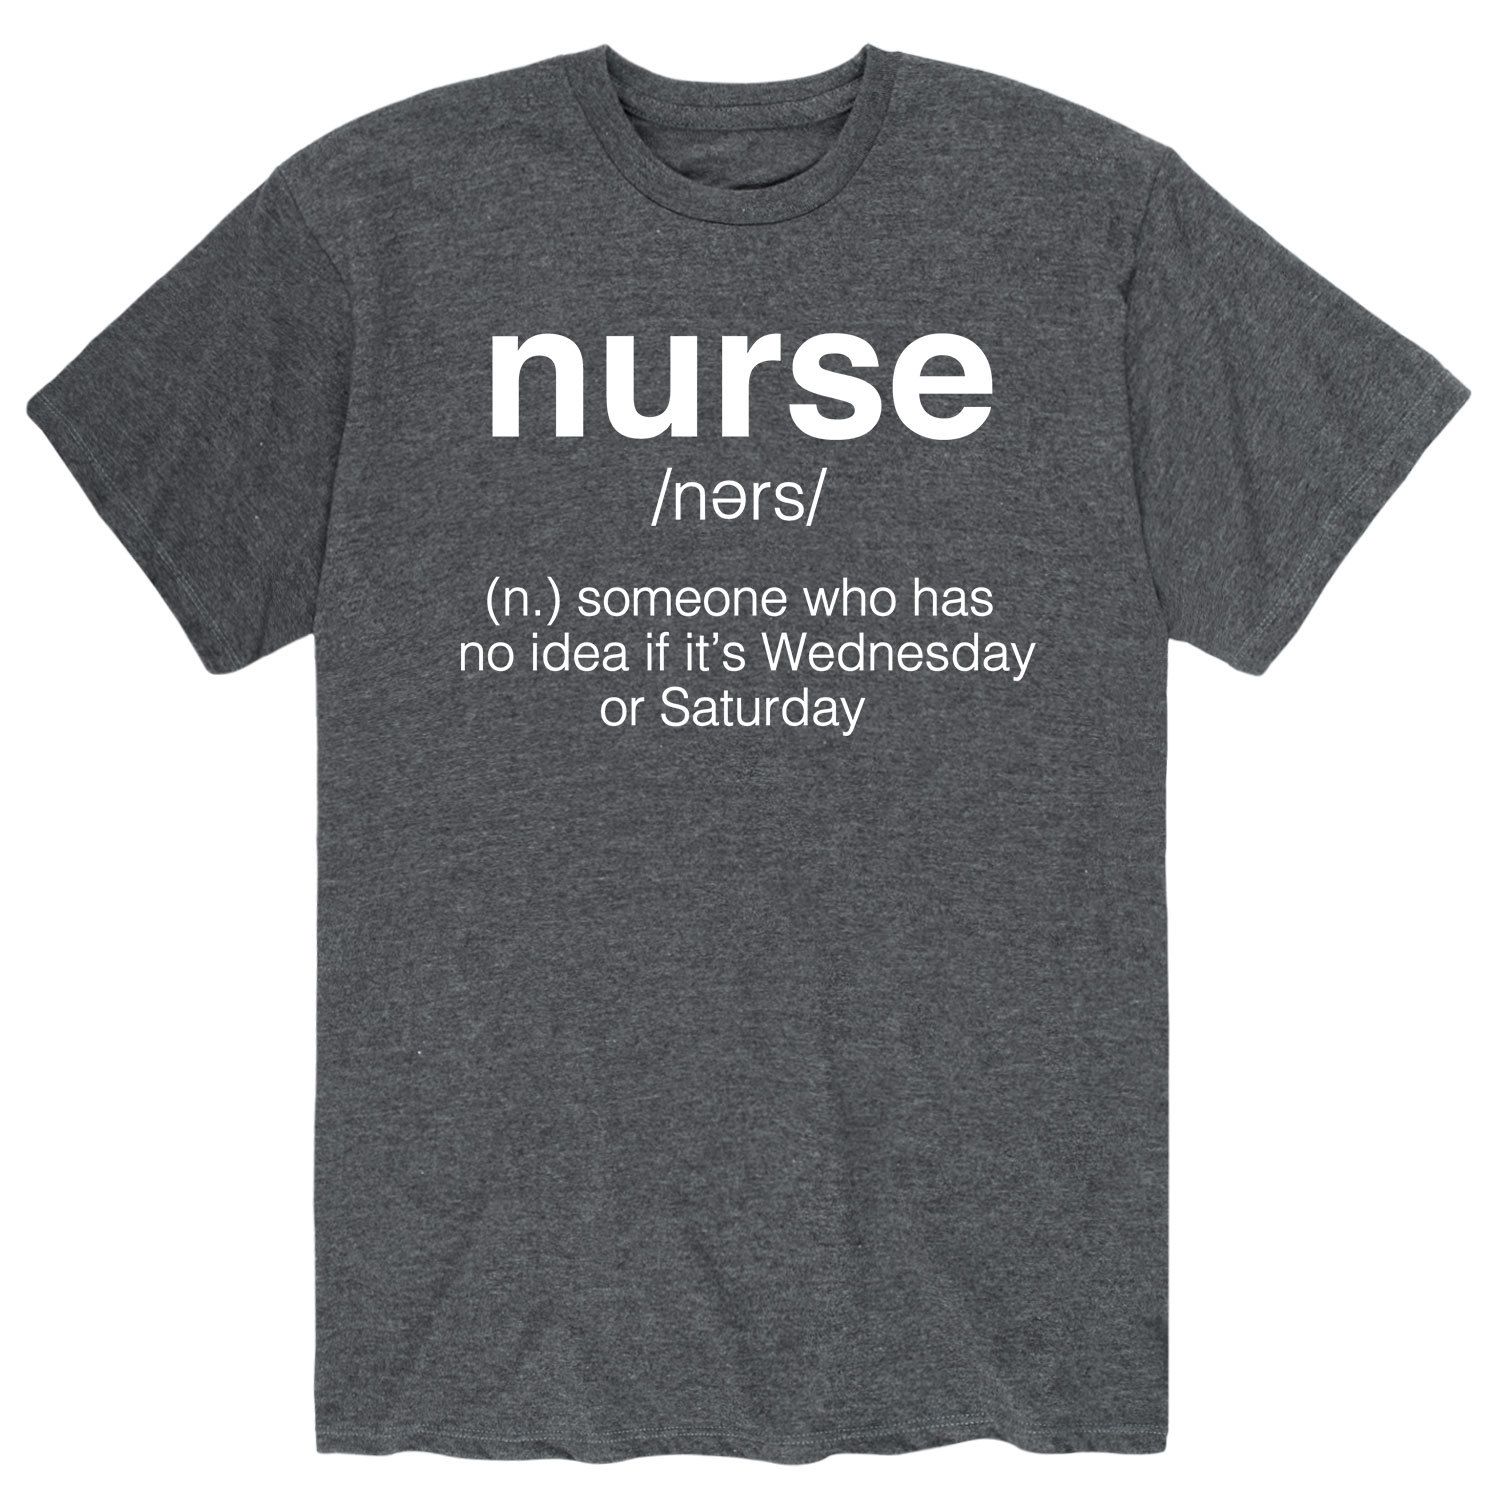 мужская футболка медсестры герои повседневности Мужская футболка с изображением медсестры Licensed Character